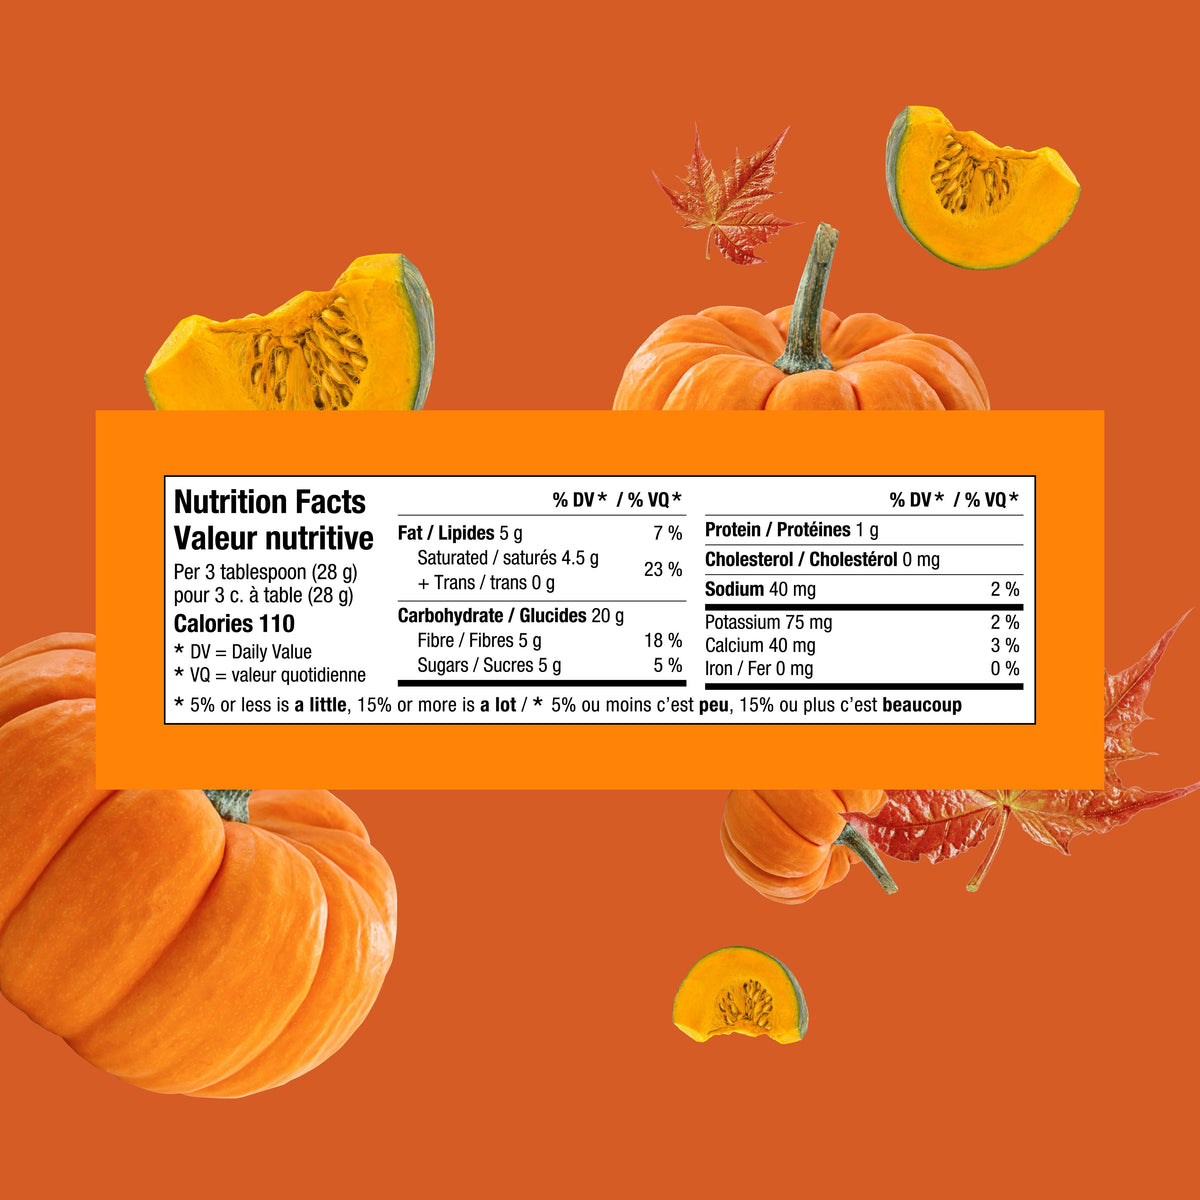 Pumpkin Maple Instant Latte